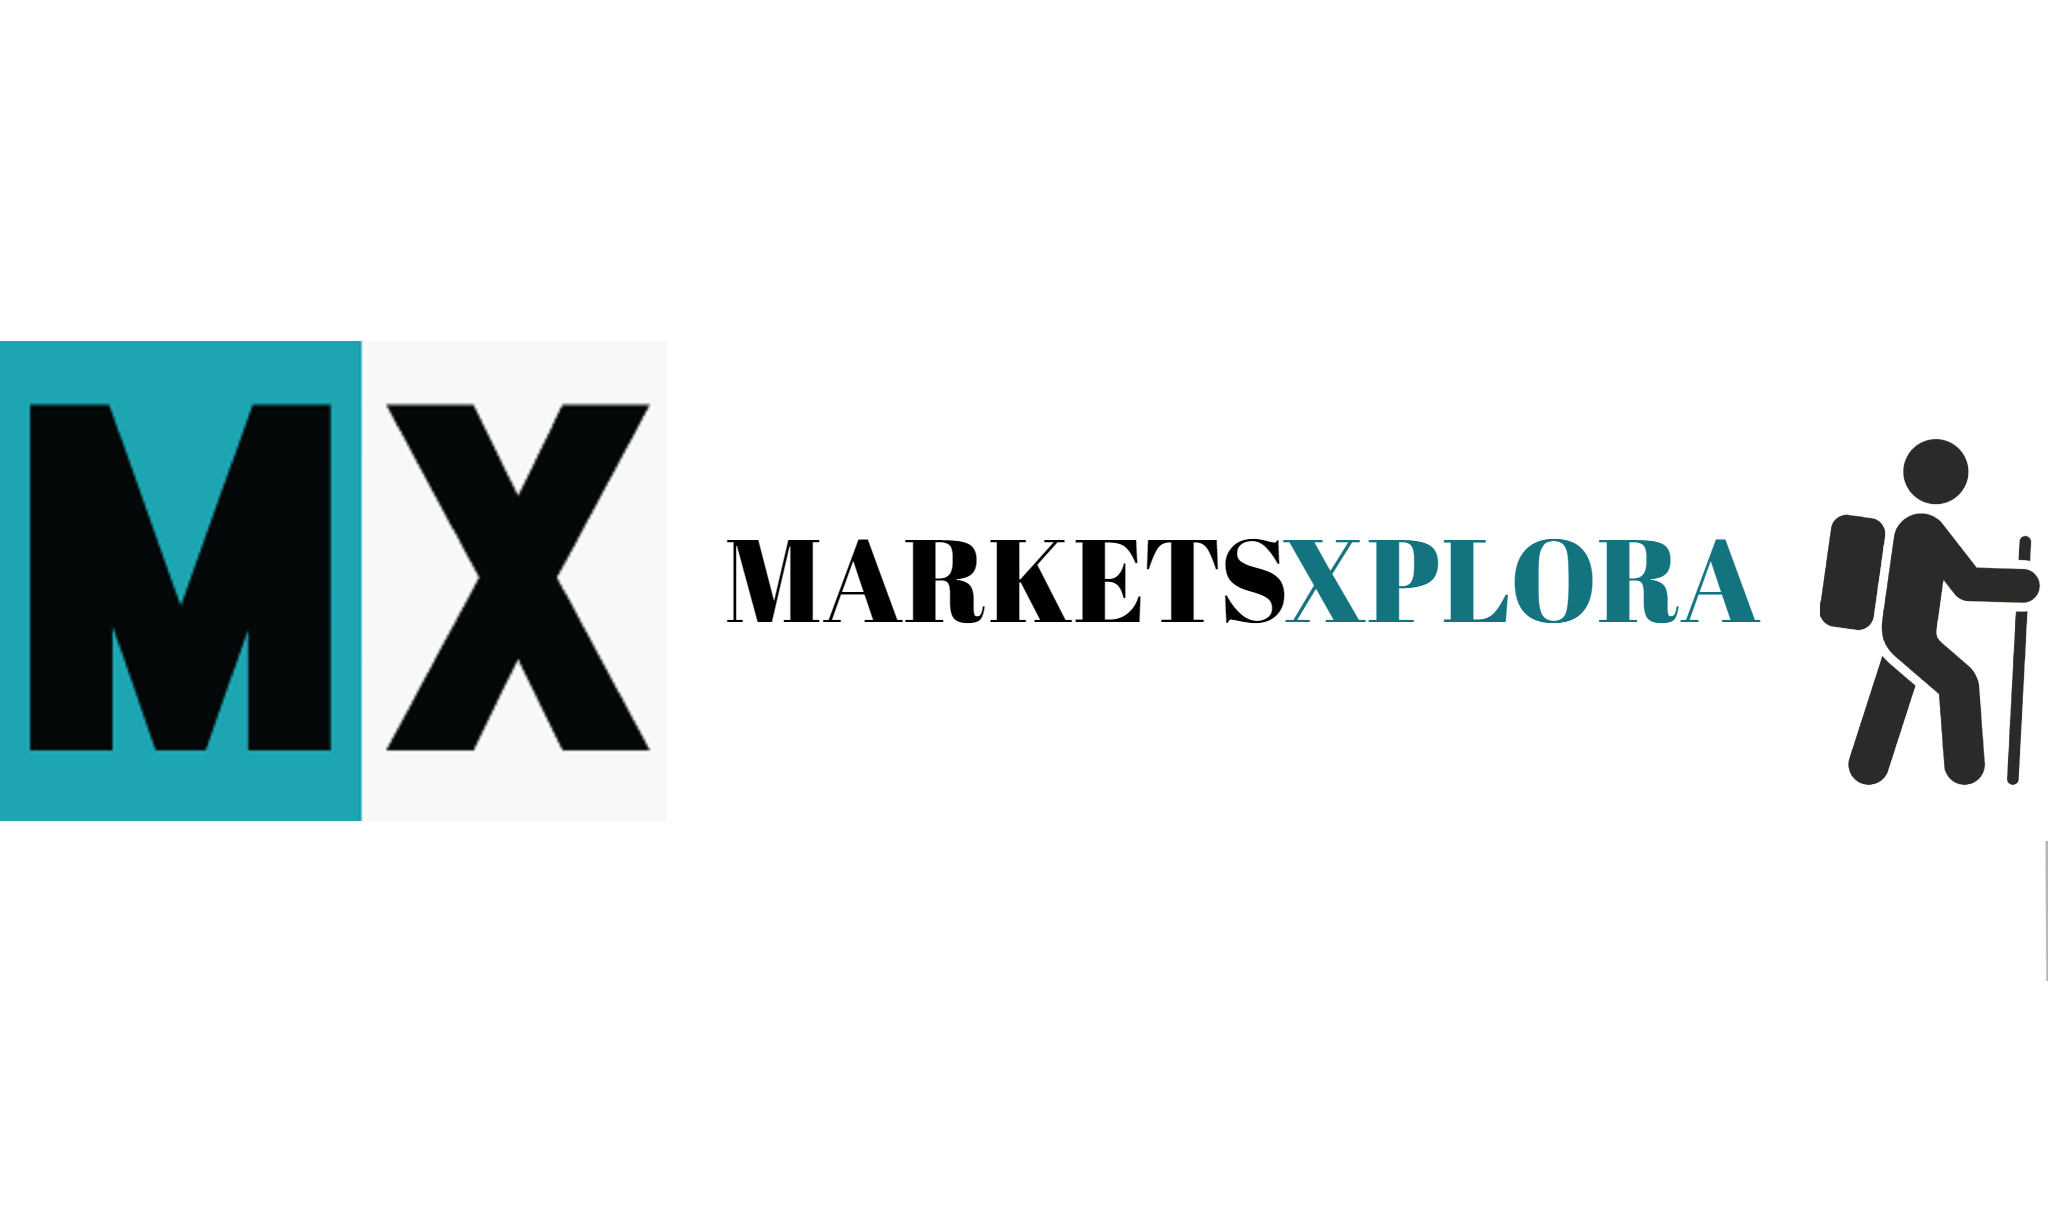 About MarketsXplora.com.